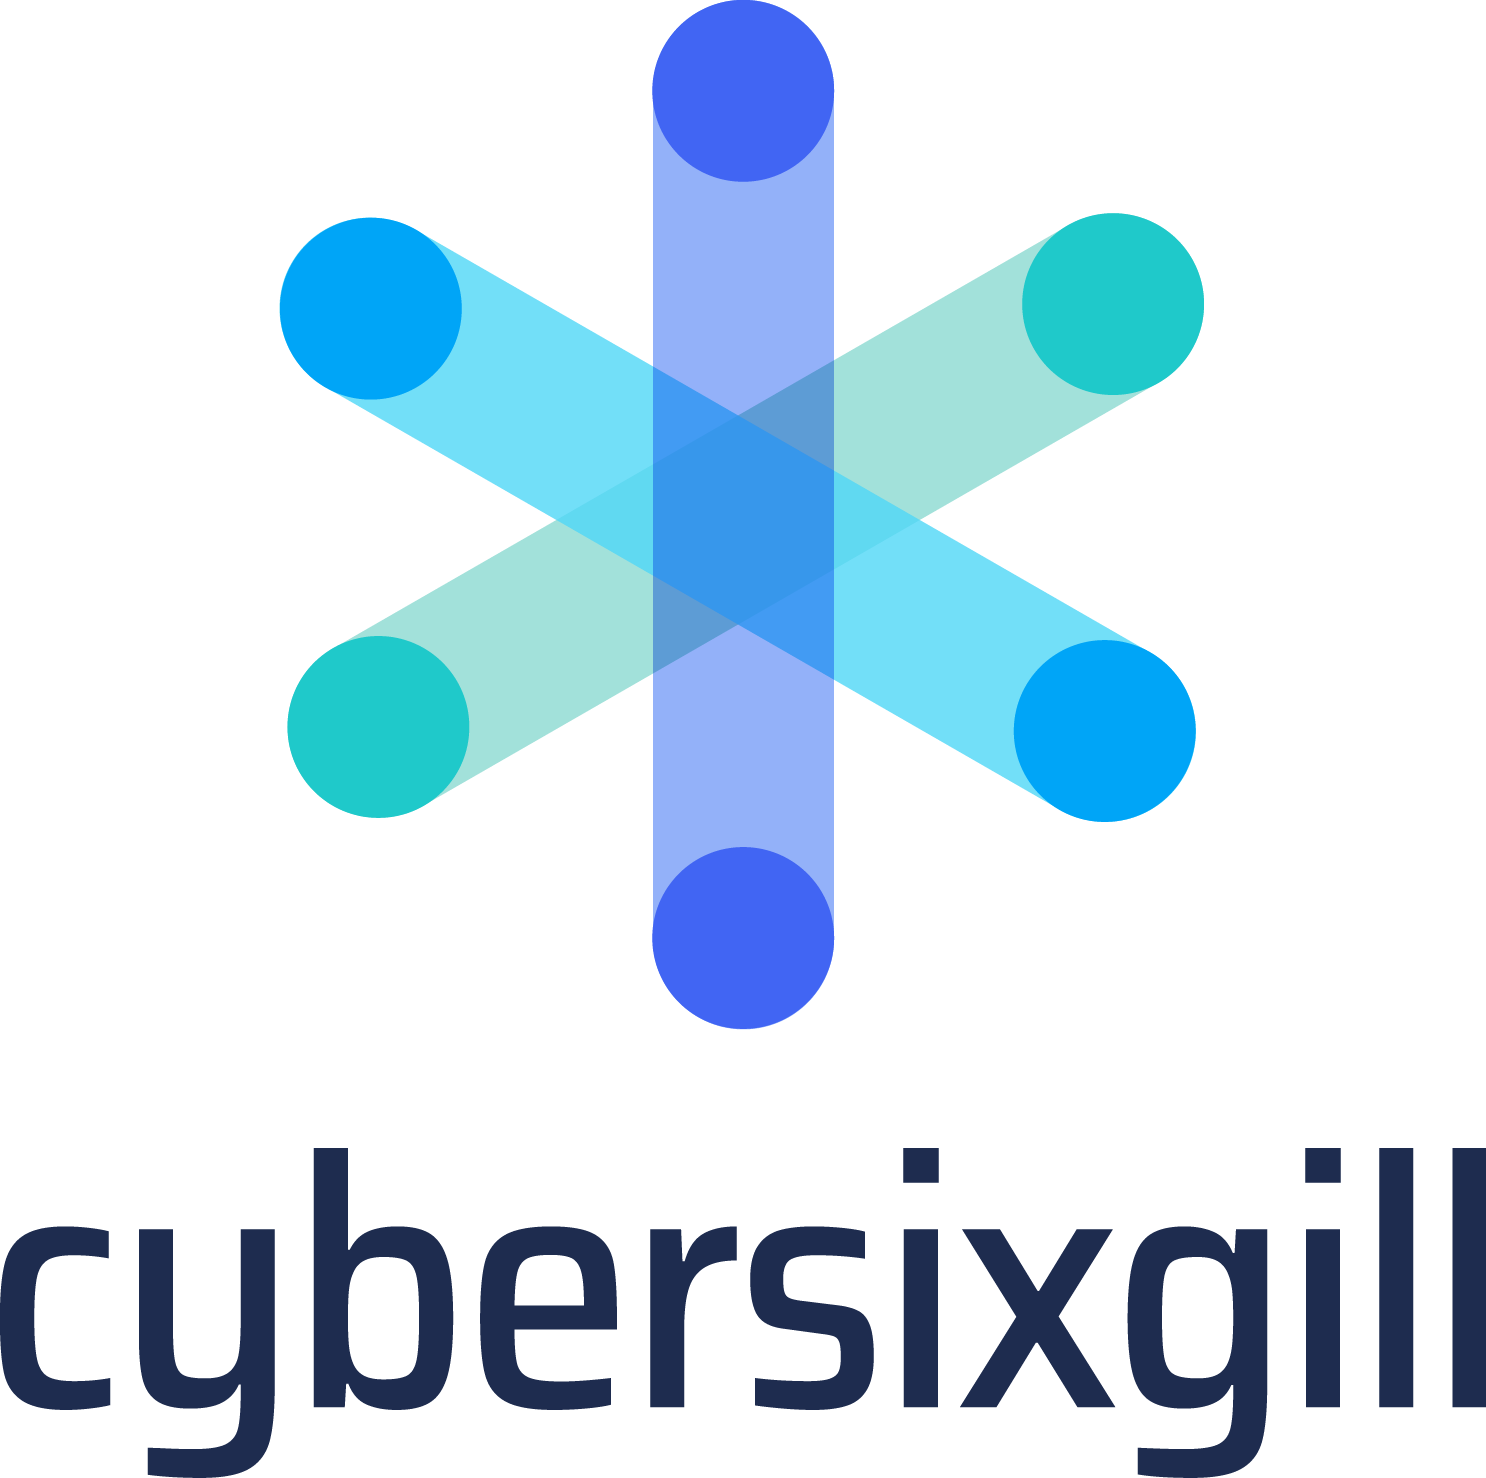 Cybersixgill integration for Maltego